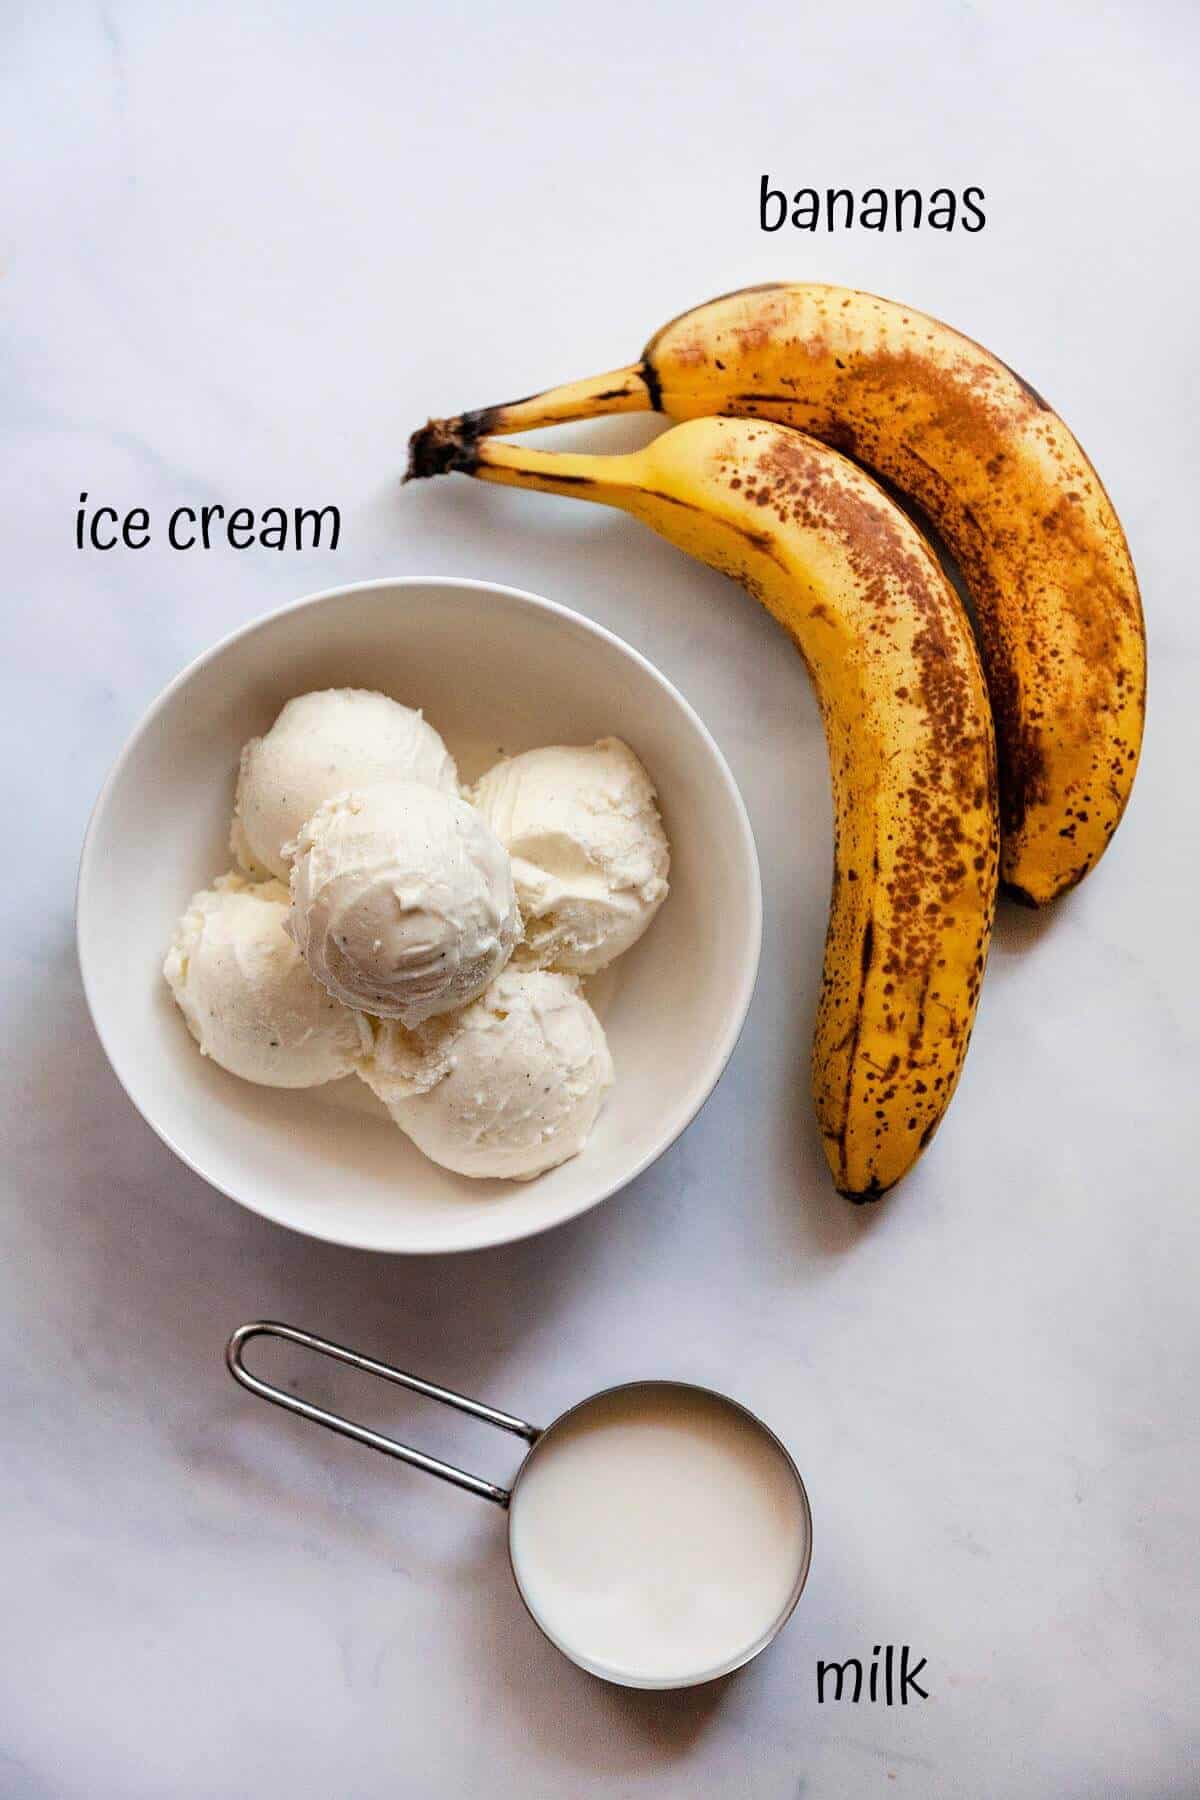 ingredients for banana milkshake: ice cream, bananas, milk